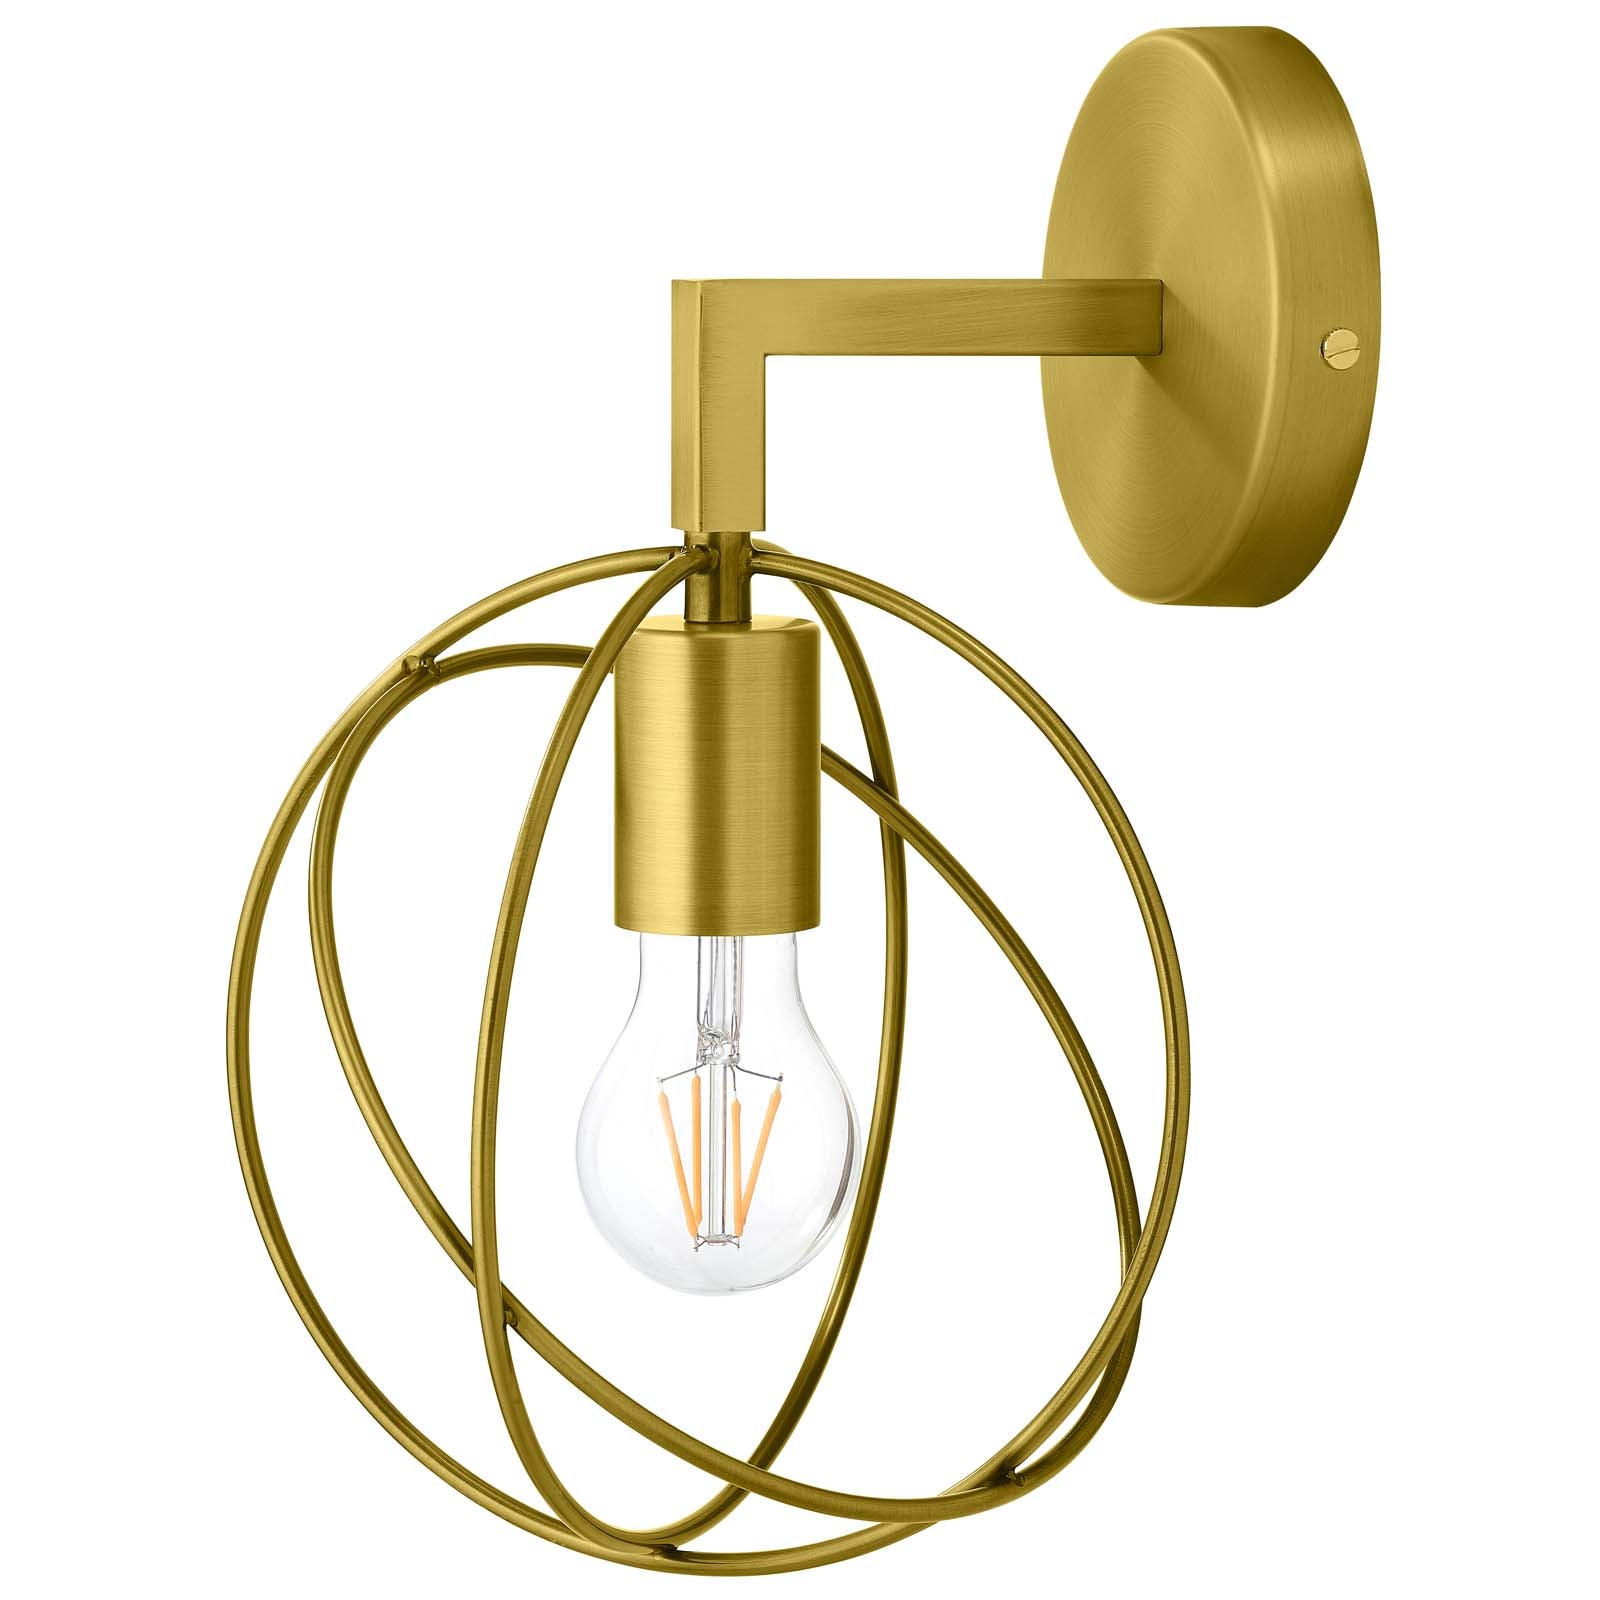 60W Mid-Century Circular Orbital Wall Sconce Light - 1 Light - 3000K - Brass Metal - E26 Bulb (Not Included)